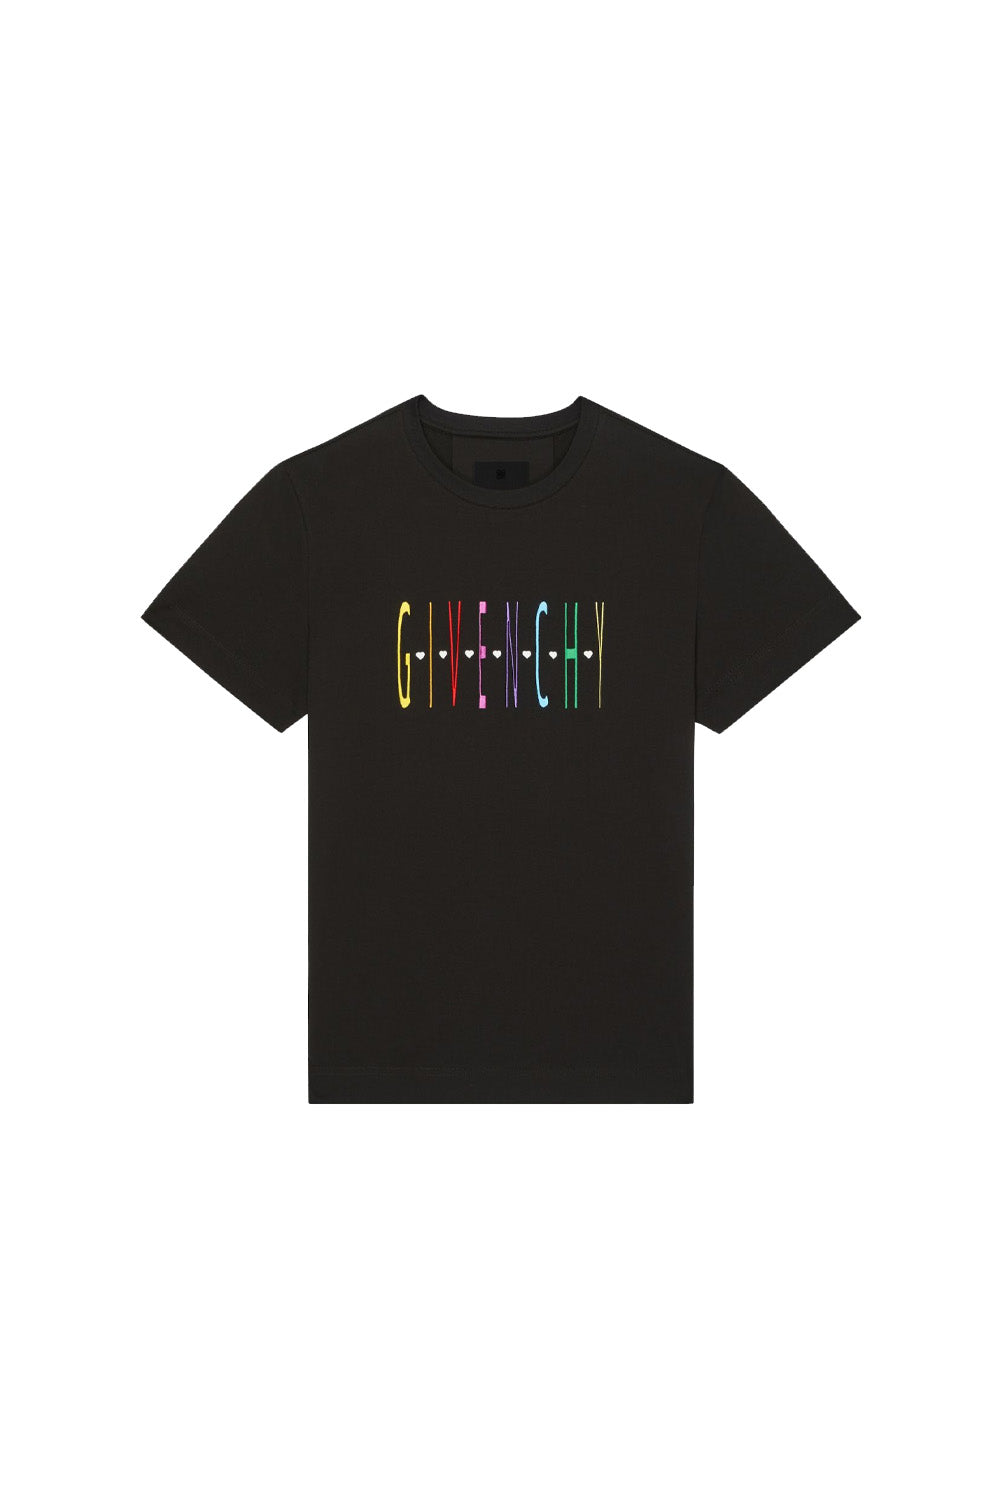 Givenchy Colorful logo t-shirt black